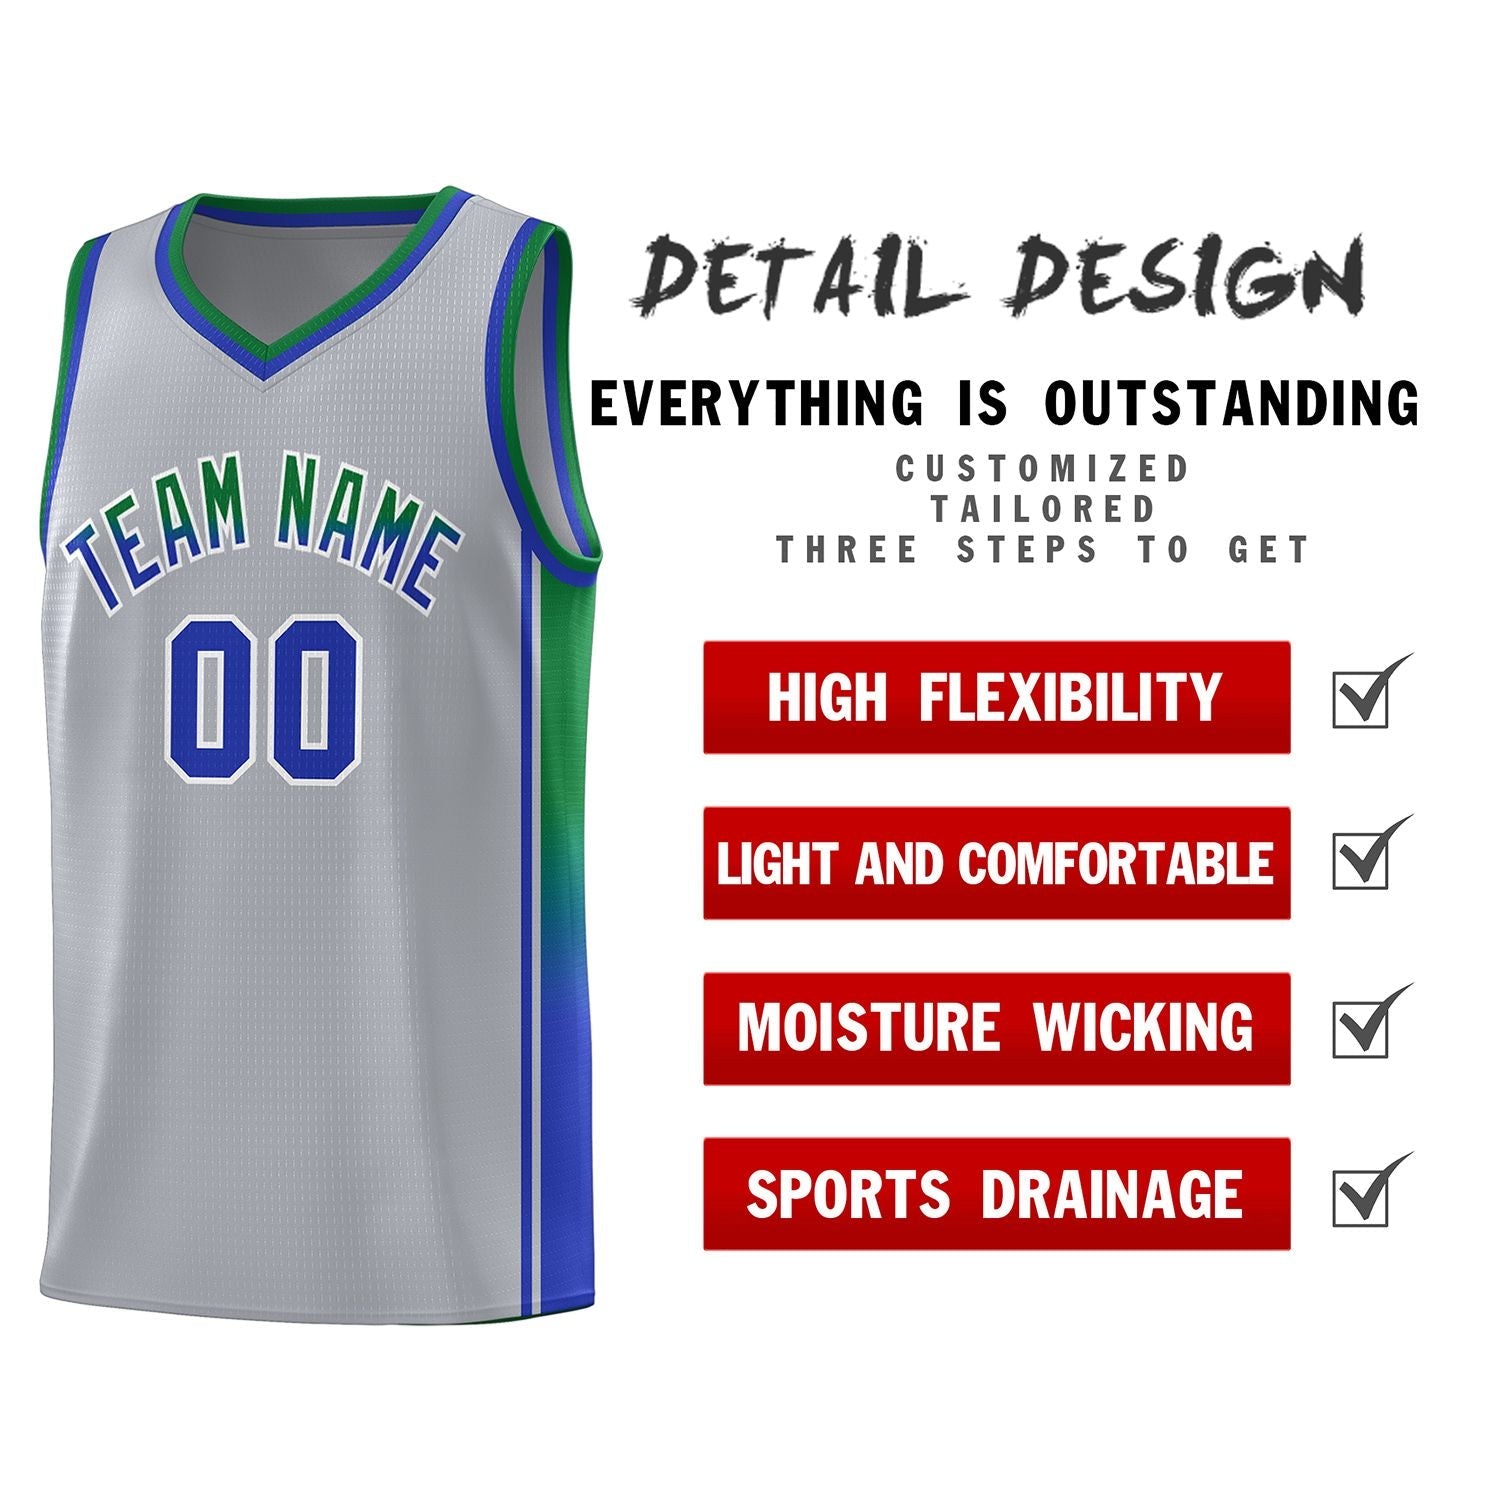 Custom Gray Kelly Green-Royal Gradient Fashion Sports Uniform Basketball Jersey